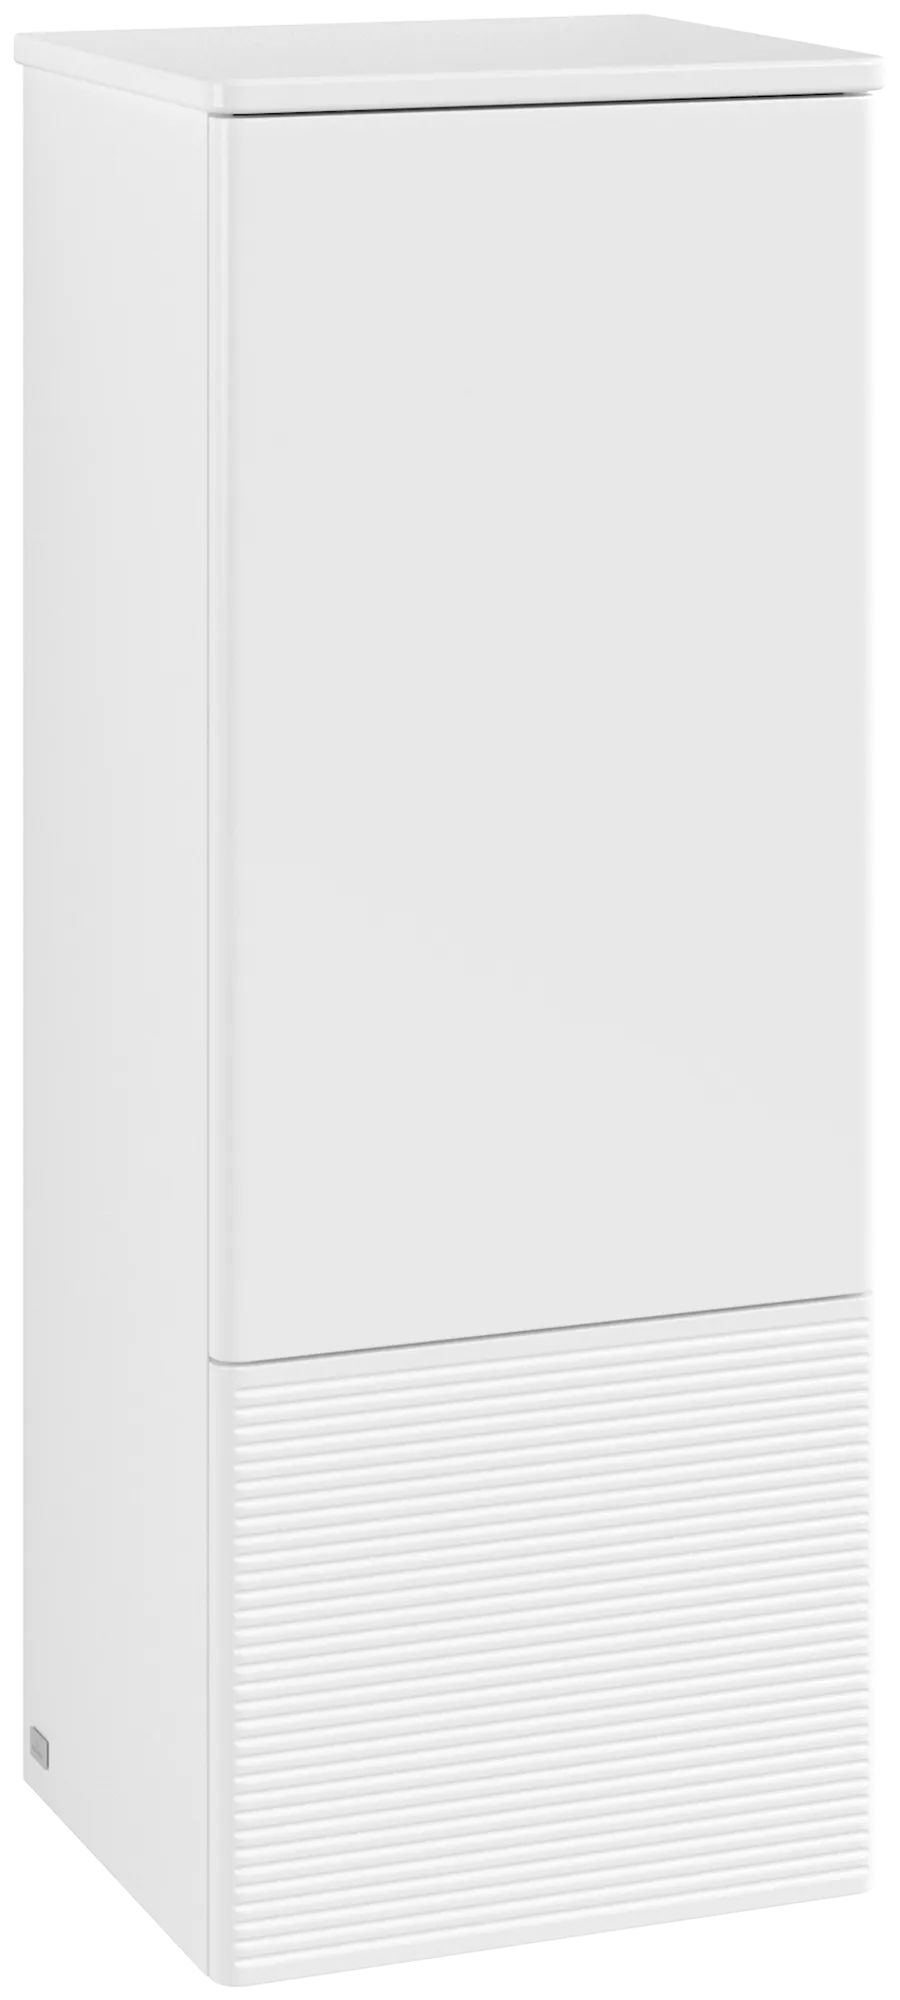 Picture of VILLEROY BOCH Antao Medium-height cabinet, 1 door, 414 x 1039 x 356 mm, Front with grain texture, White Matt Lacquer / White Matt Lacquer #K44100MT